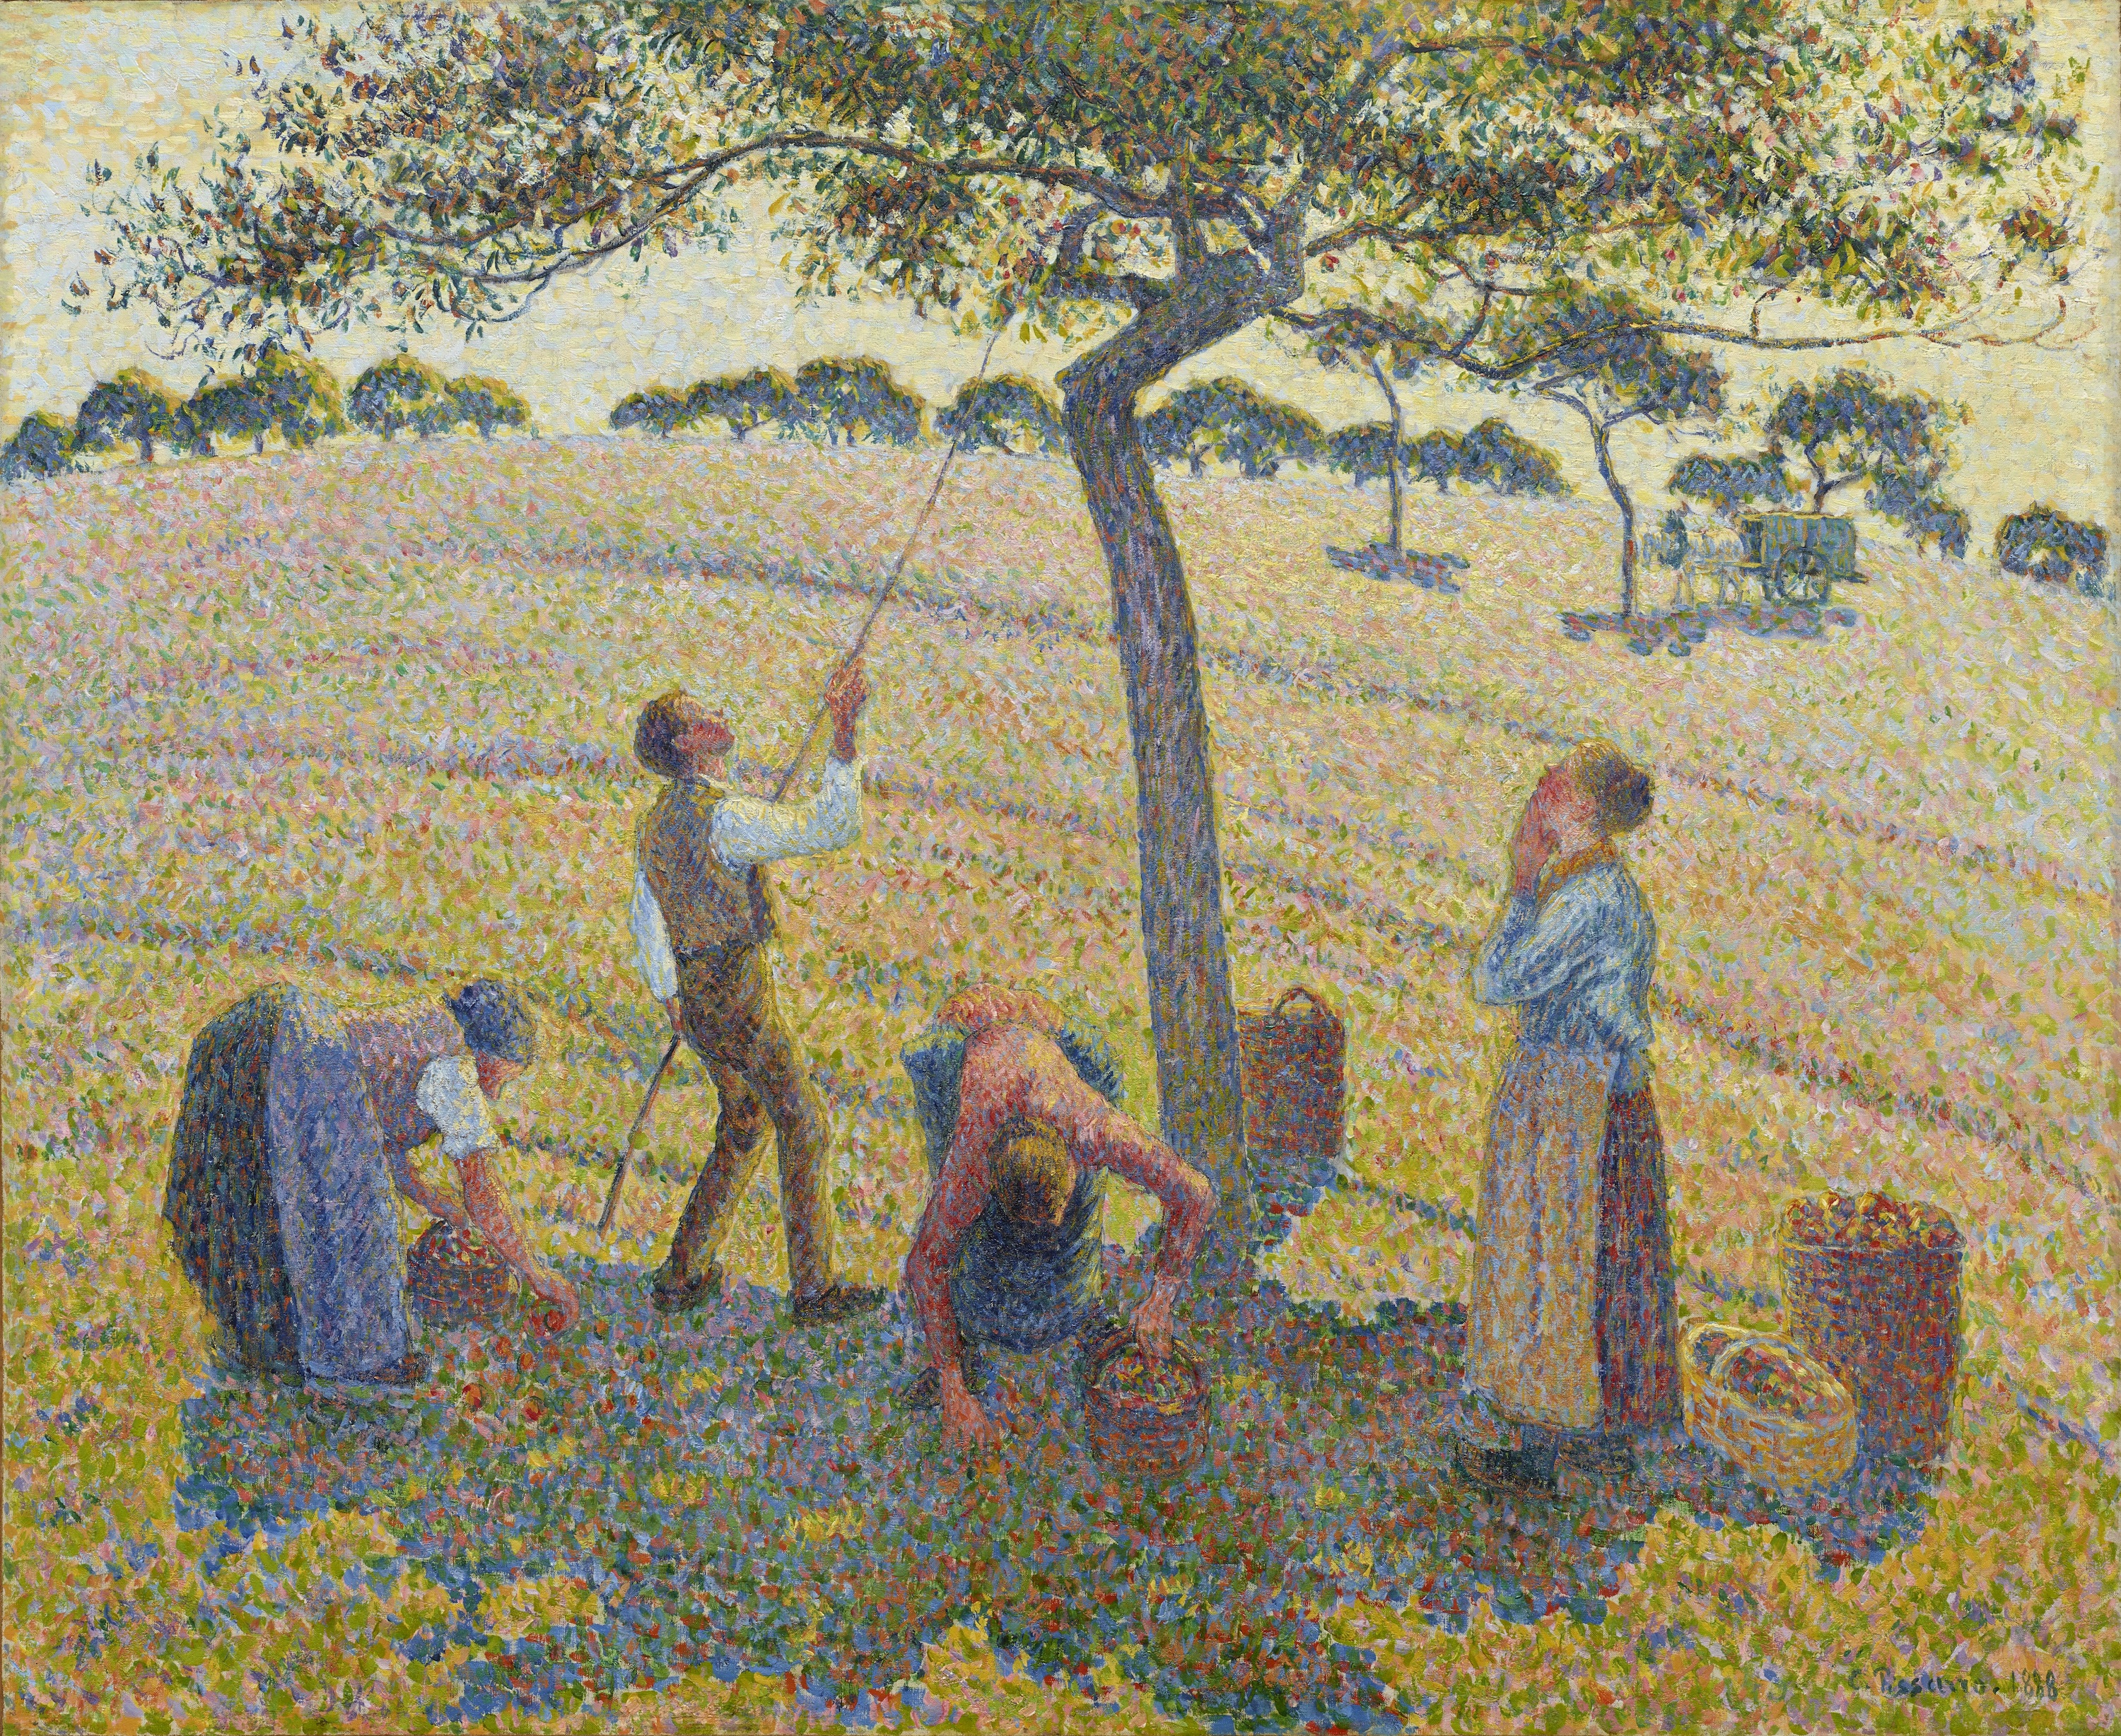 Cules de mere by Camille Pissarro - 1888 - 61 x 74 cm 